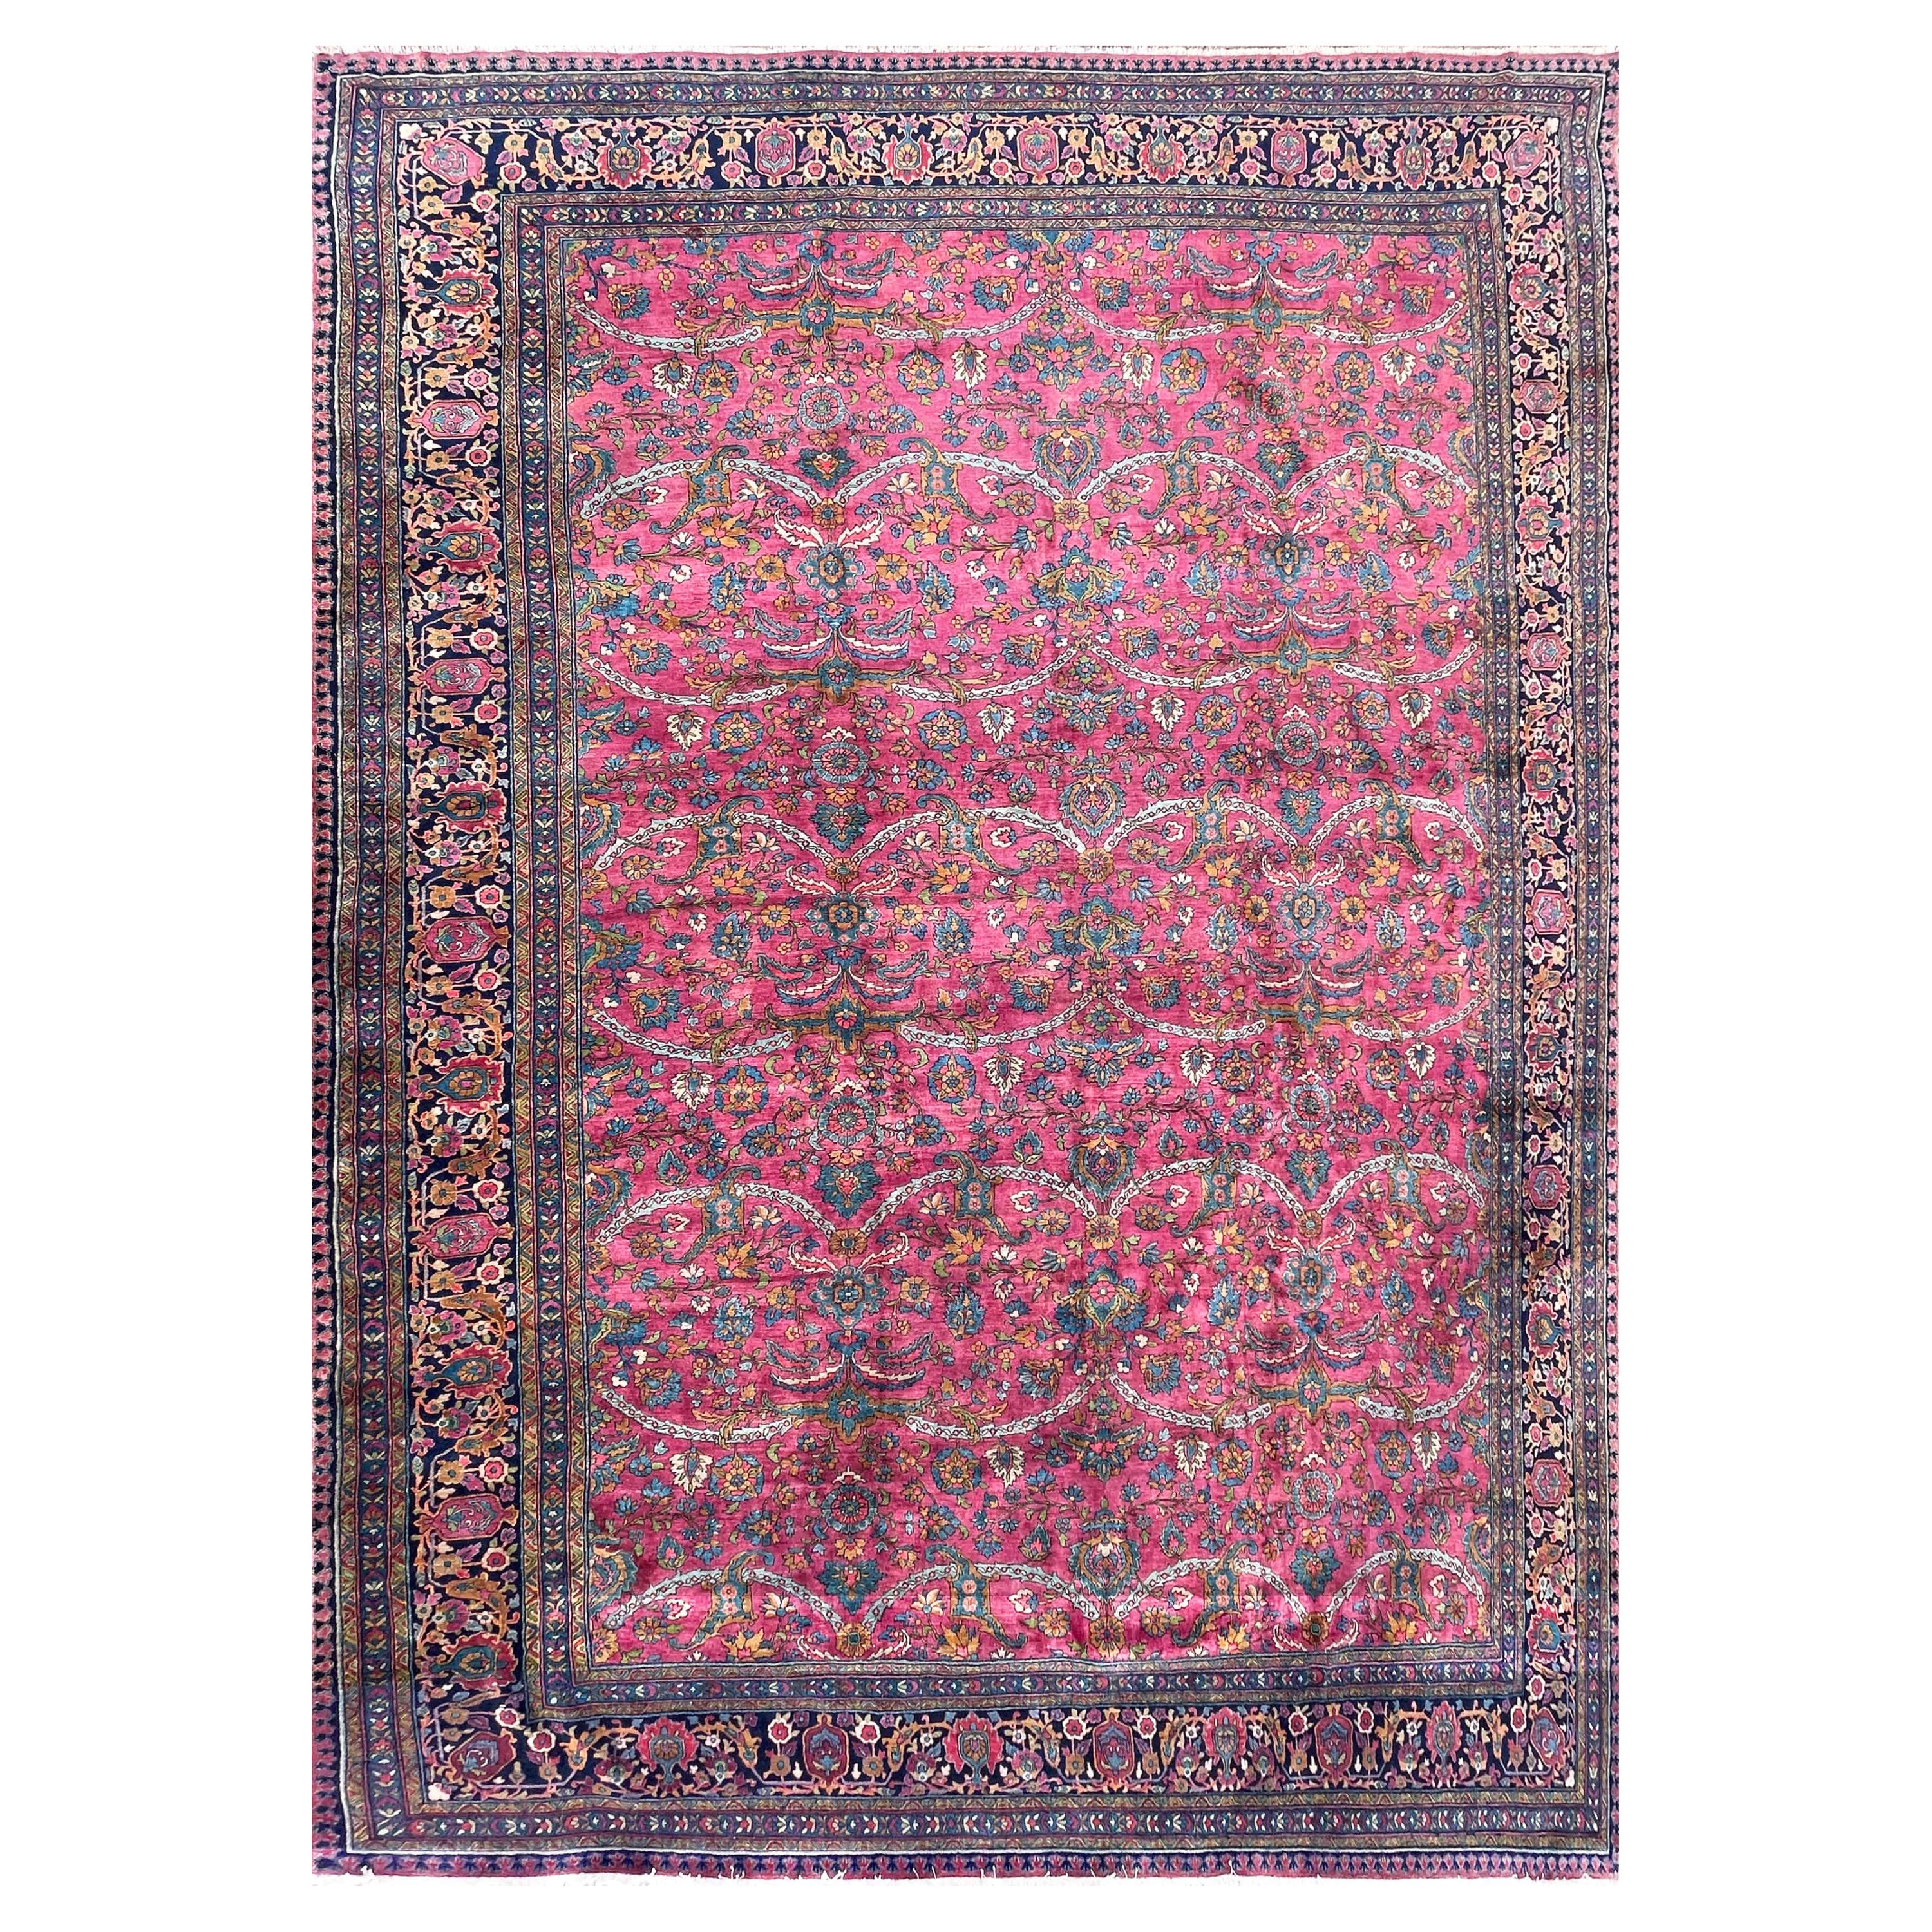 Antique Persian Mohajeran Sarouk carpet, Most Unusual